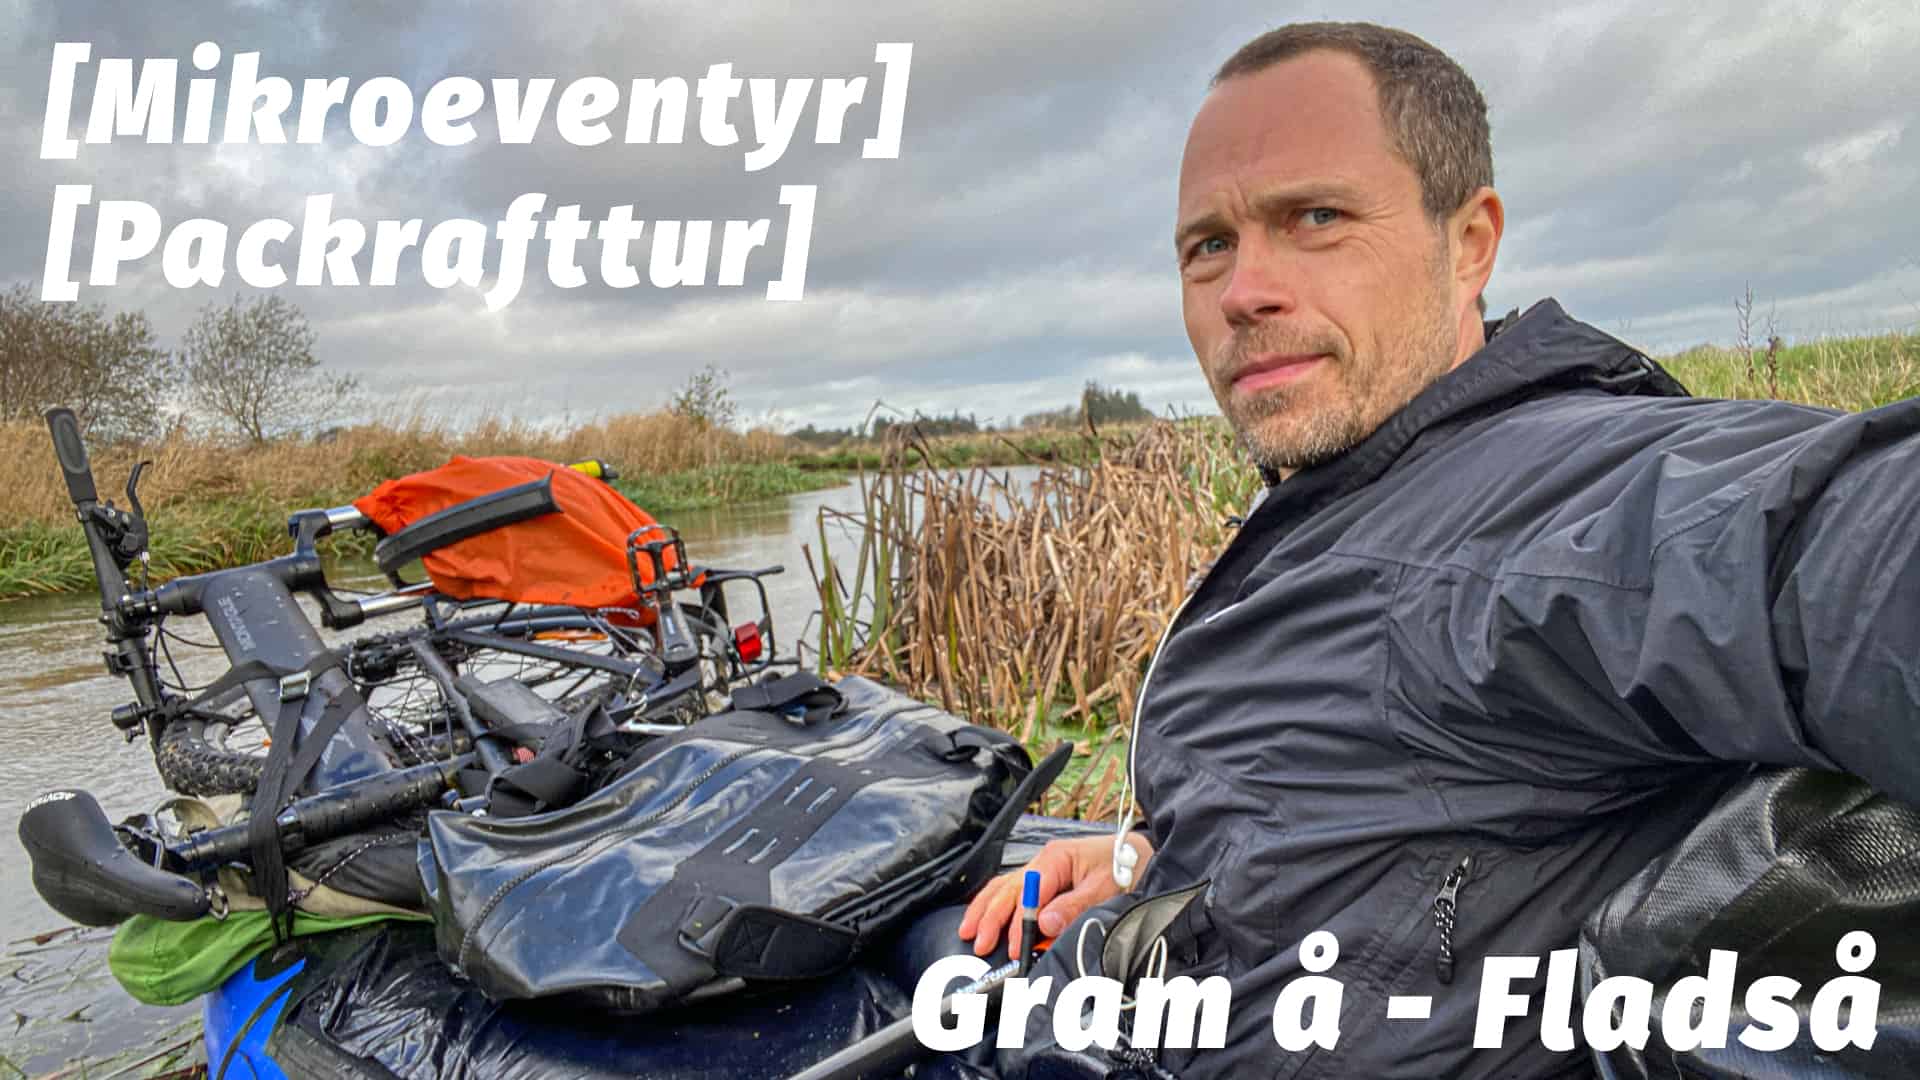 Gram å - Fladså, Packraft og cykel (kano) [Mikroeventyr] med eventyrer Erik B. Jørgensen